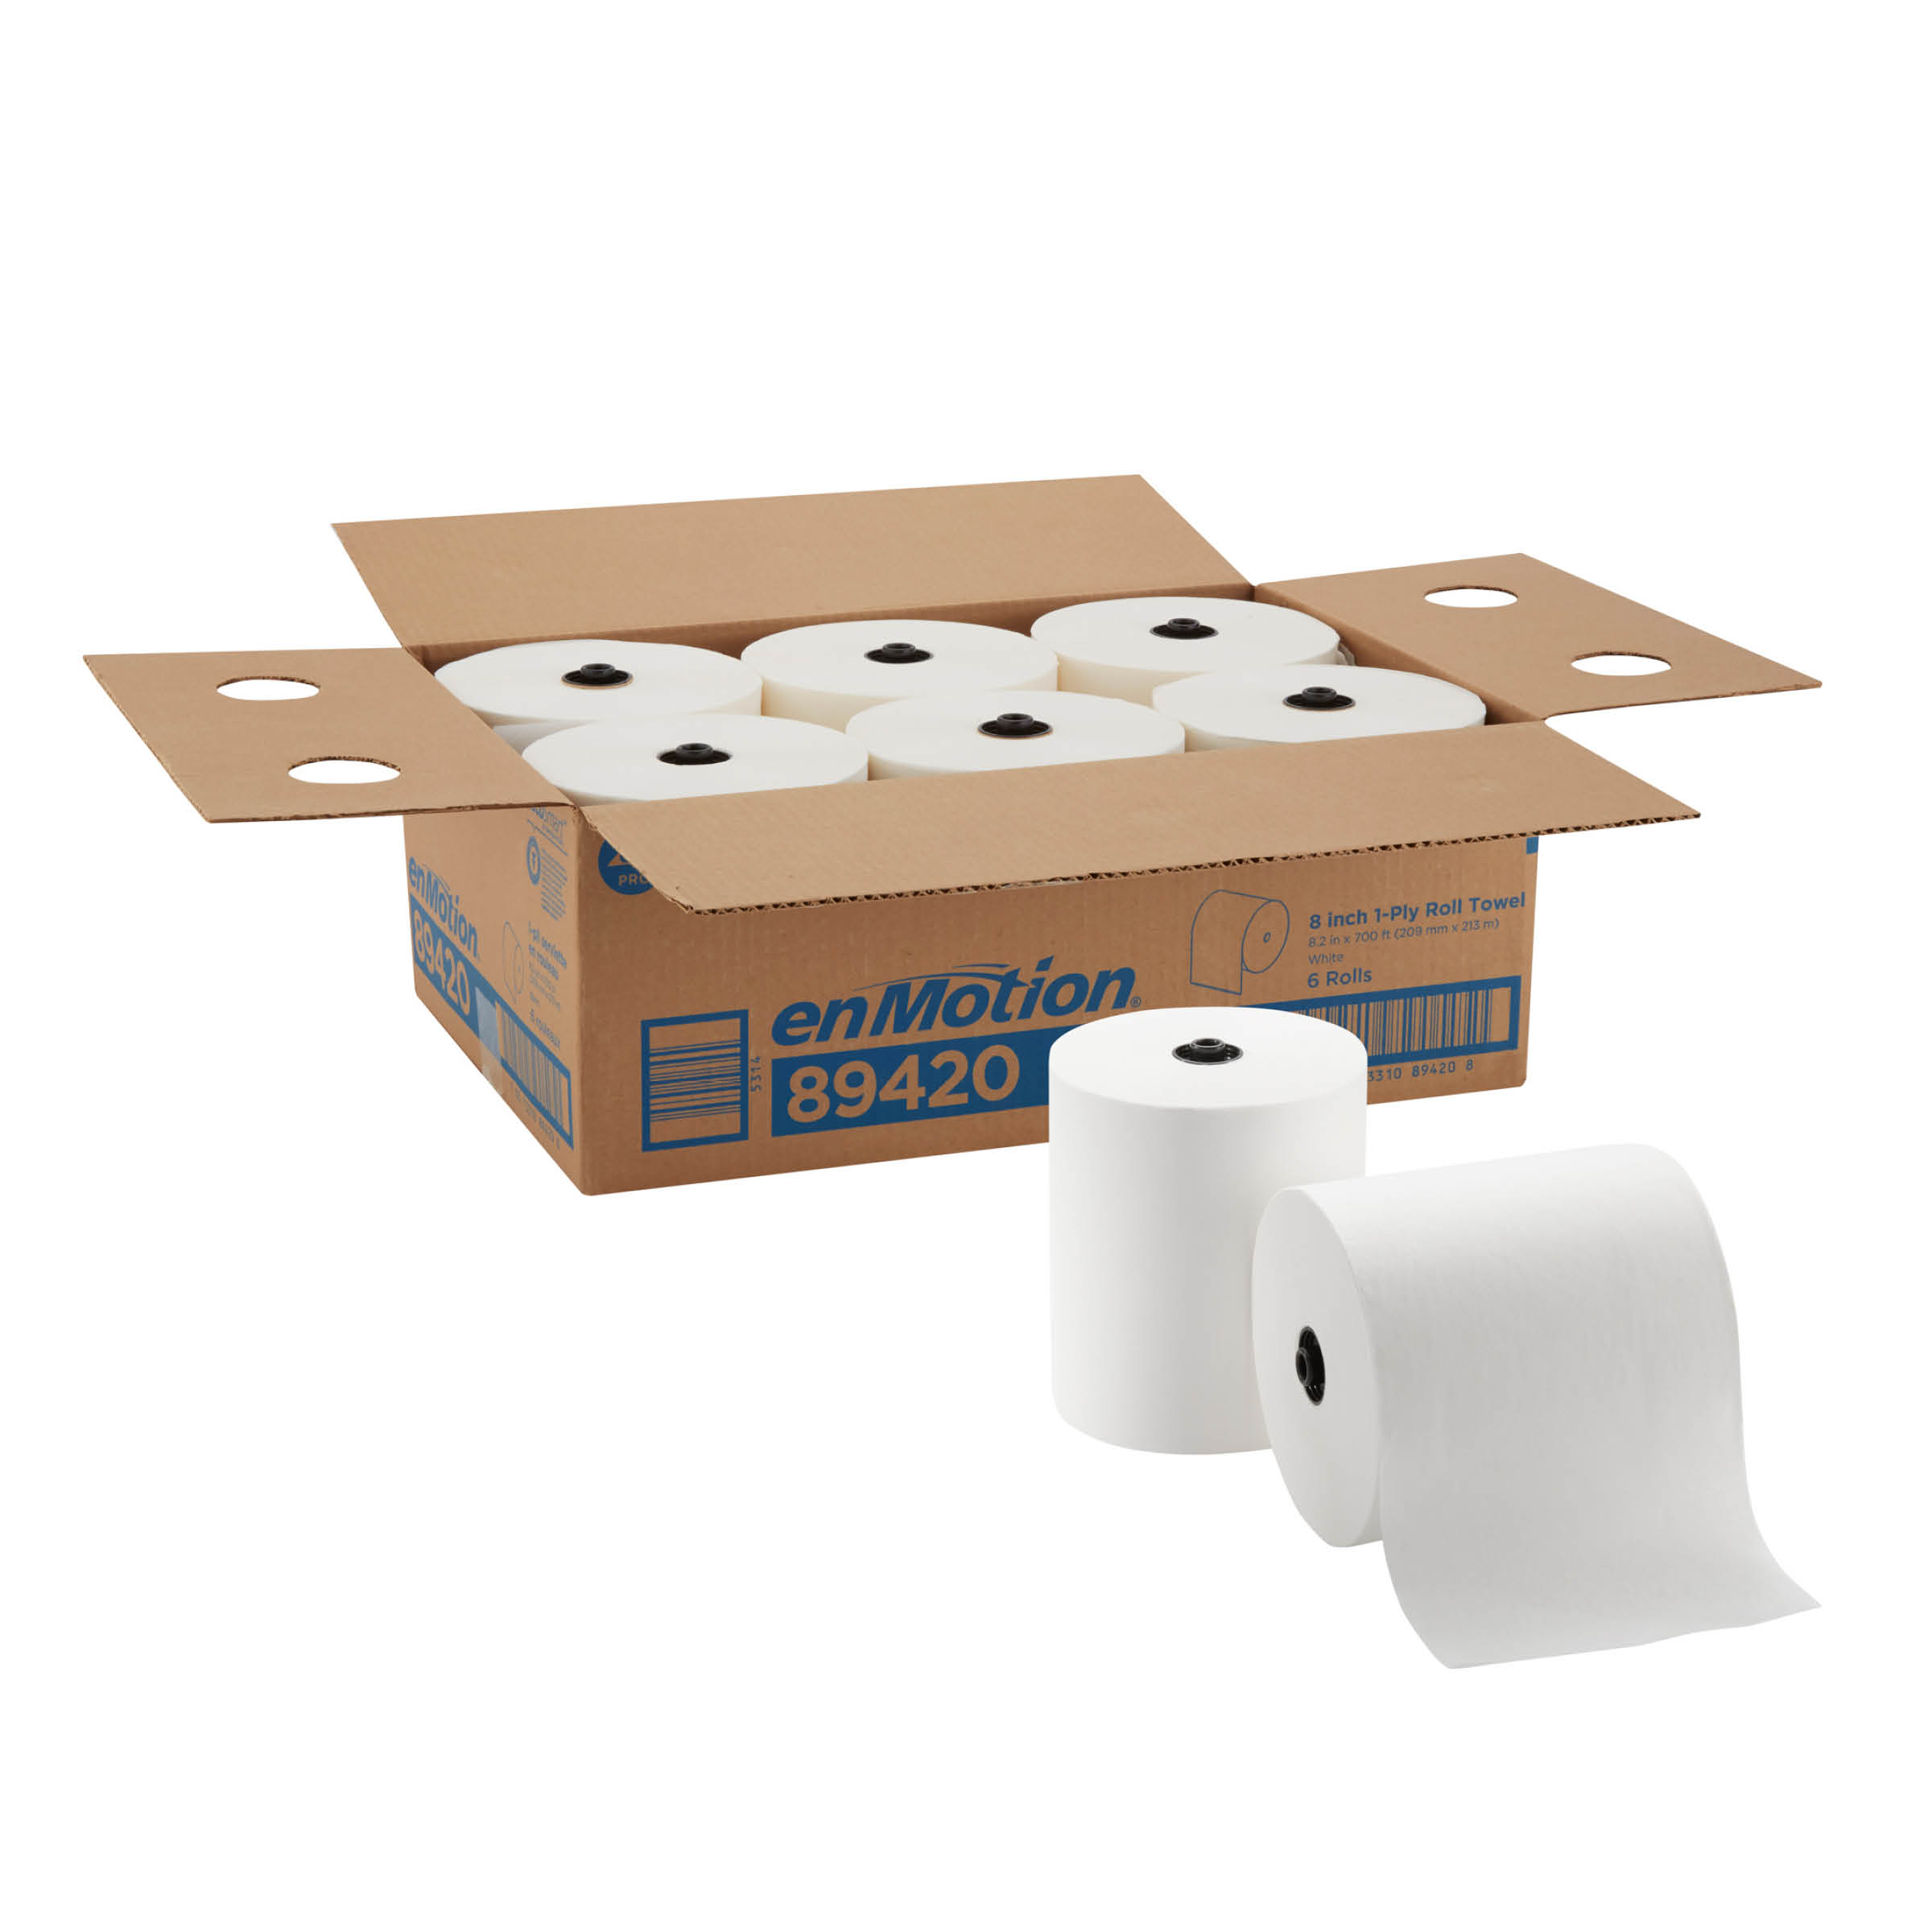 GP PRO ENMOTION® 8# Paper Towel Roll, White, 89420 700' (6 per case)